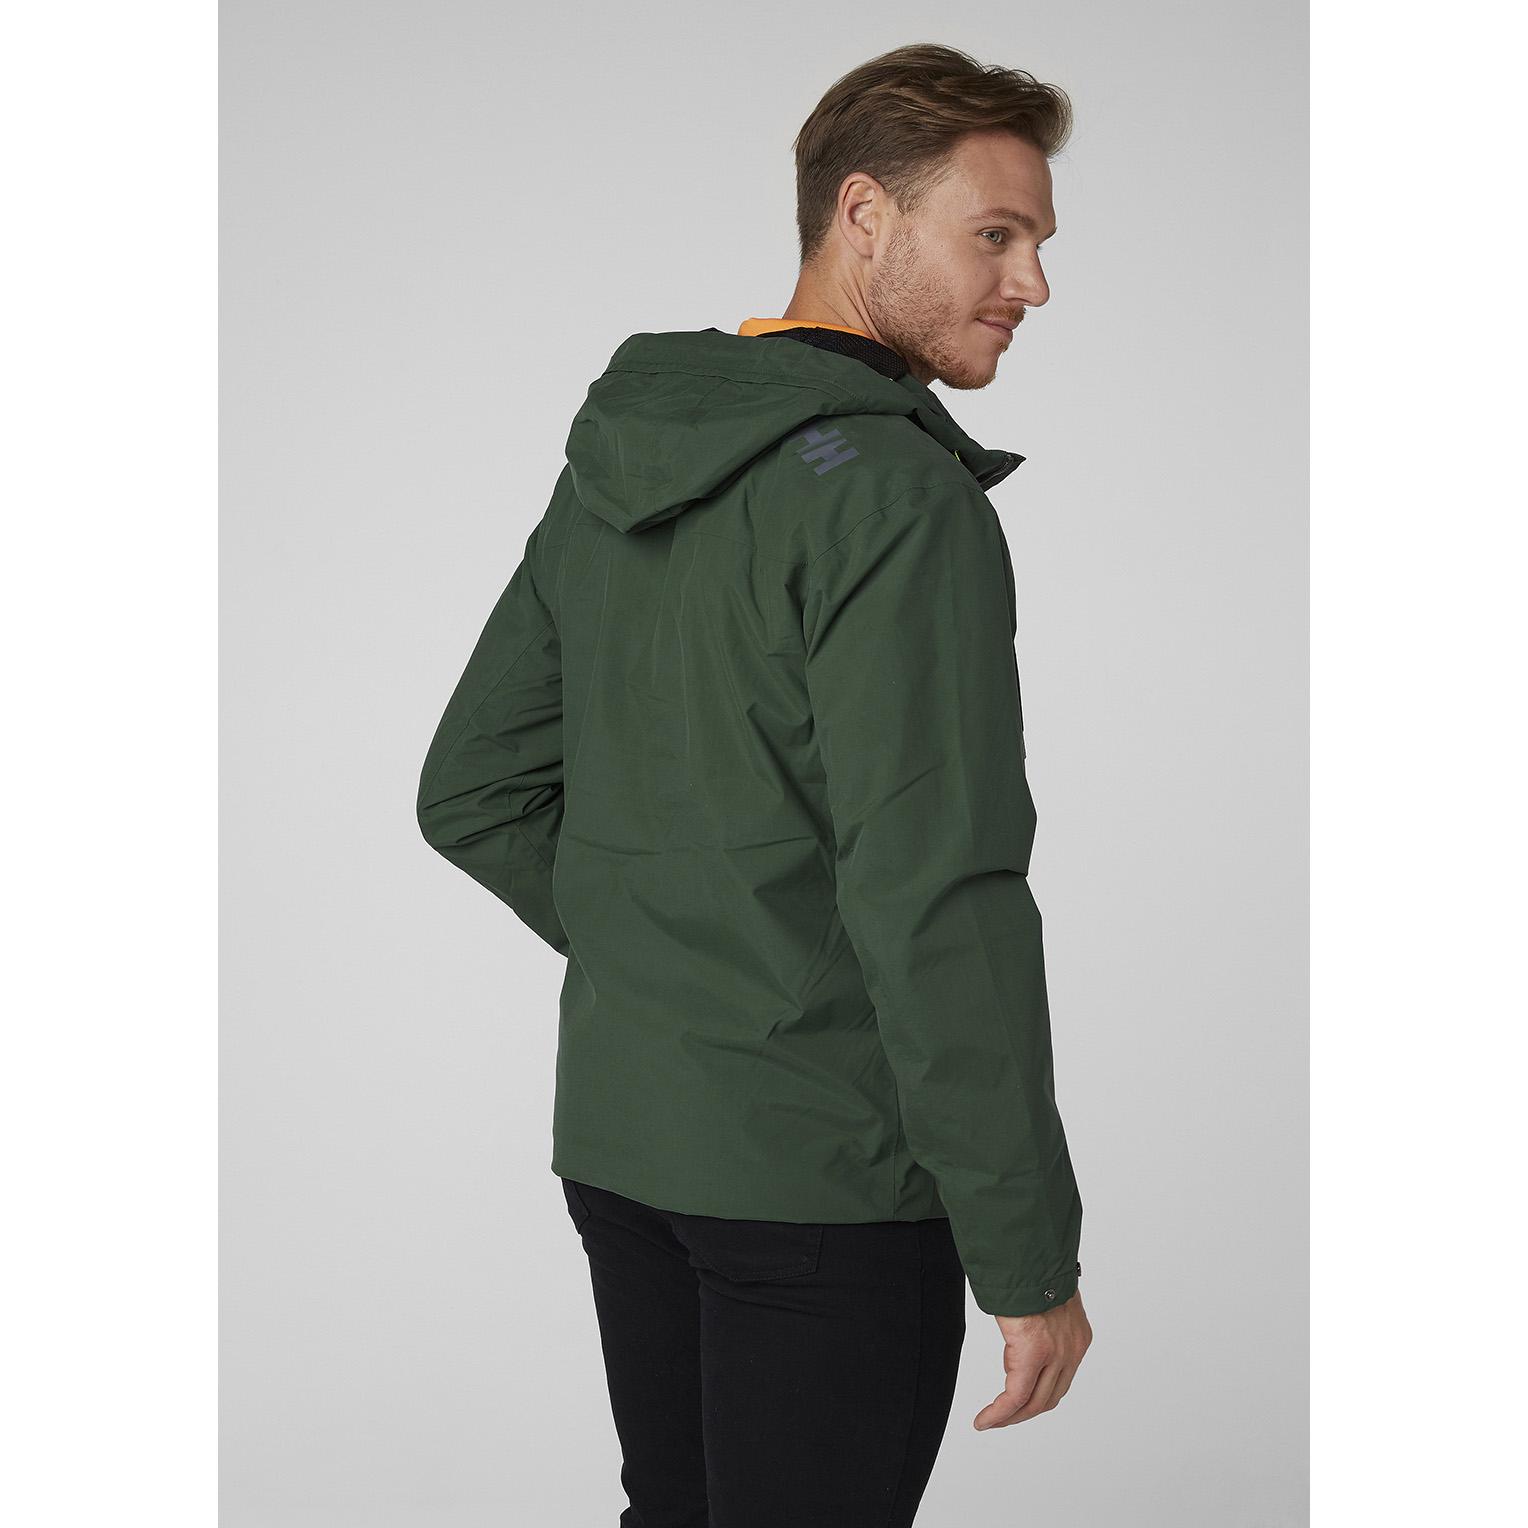 Helly Hansen Cotton Rigging Rain Jacket Green for Men - Lyst